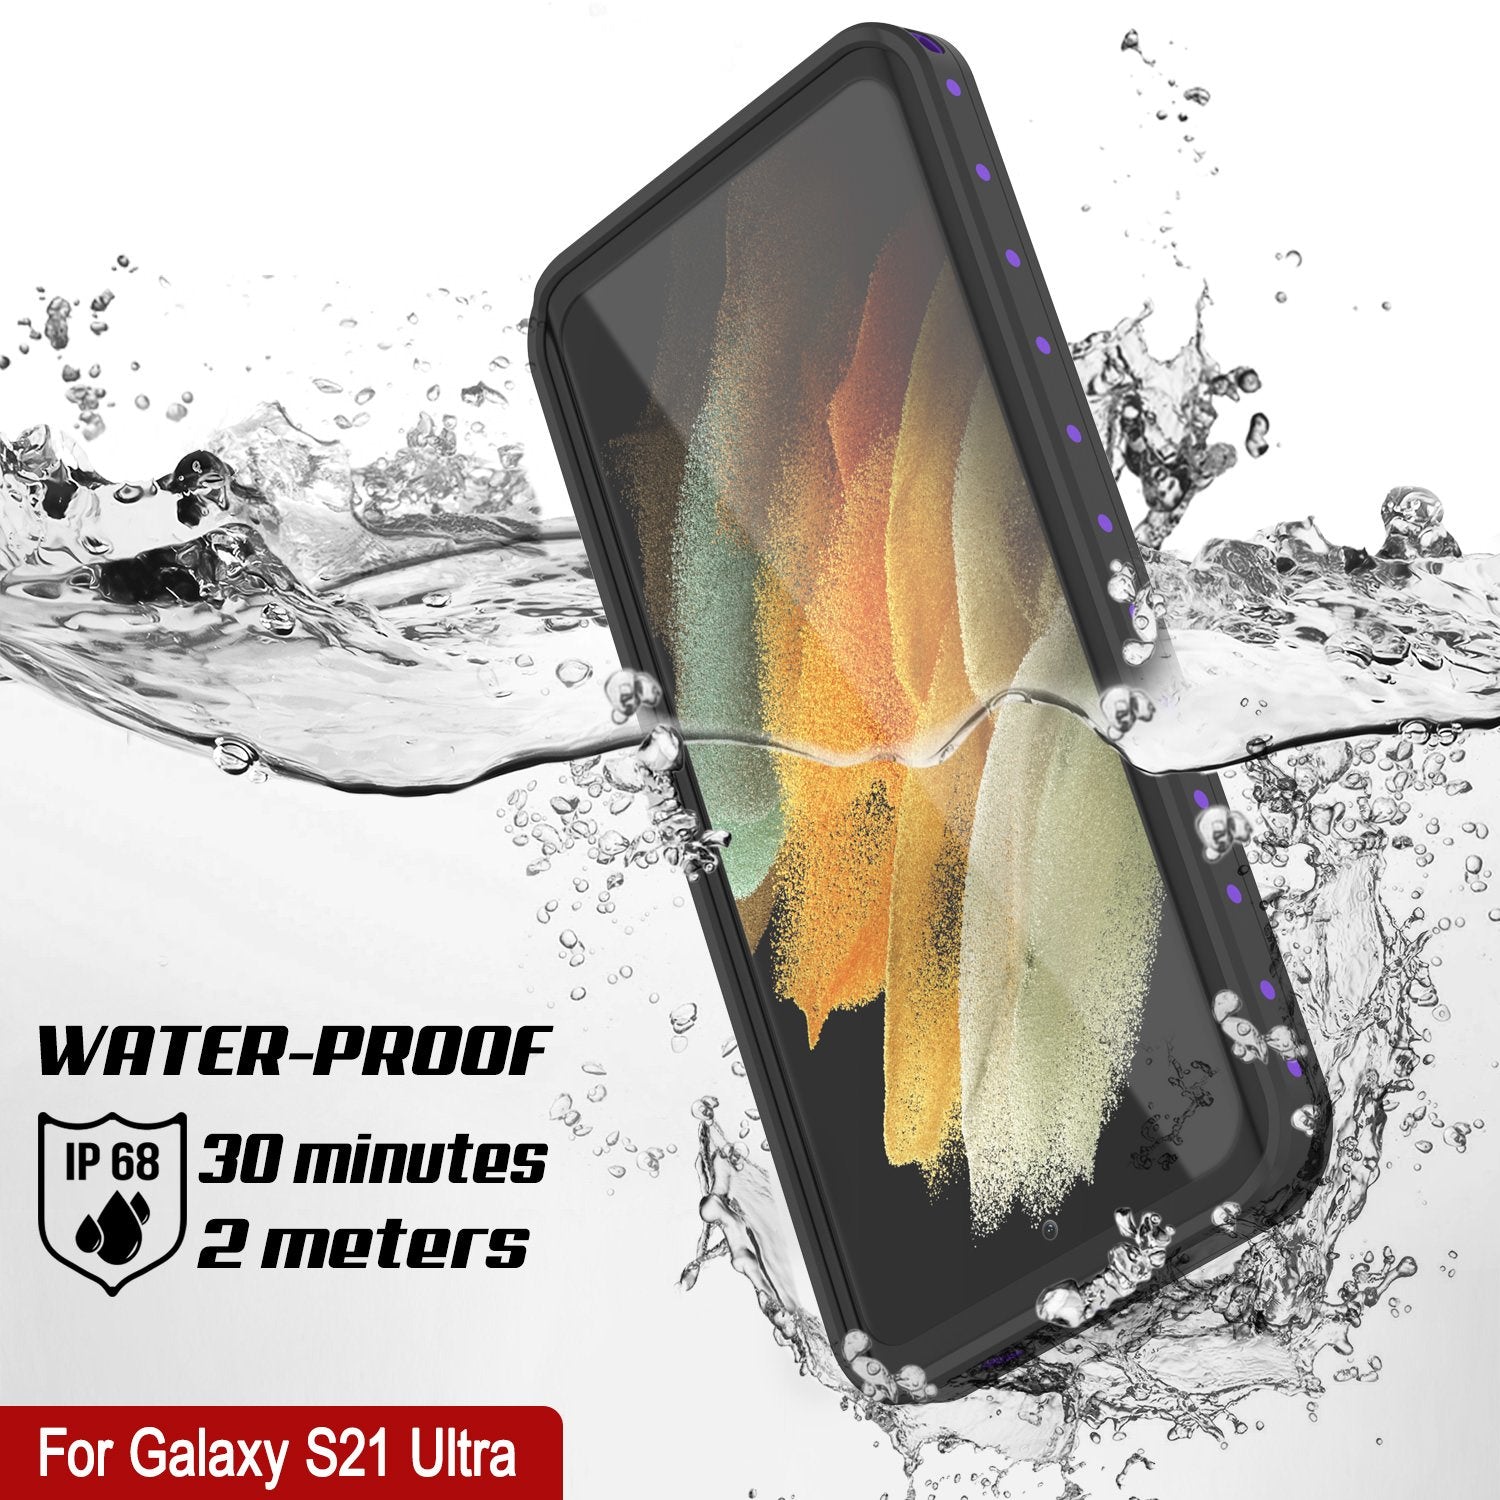 Galaxy S21 Ultra Waterproof Case PunkCase StudStar Purple Thin 6.6ft Underwater IP68 Shock/Snow Proof